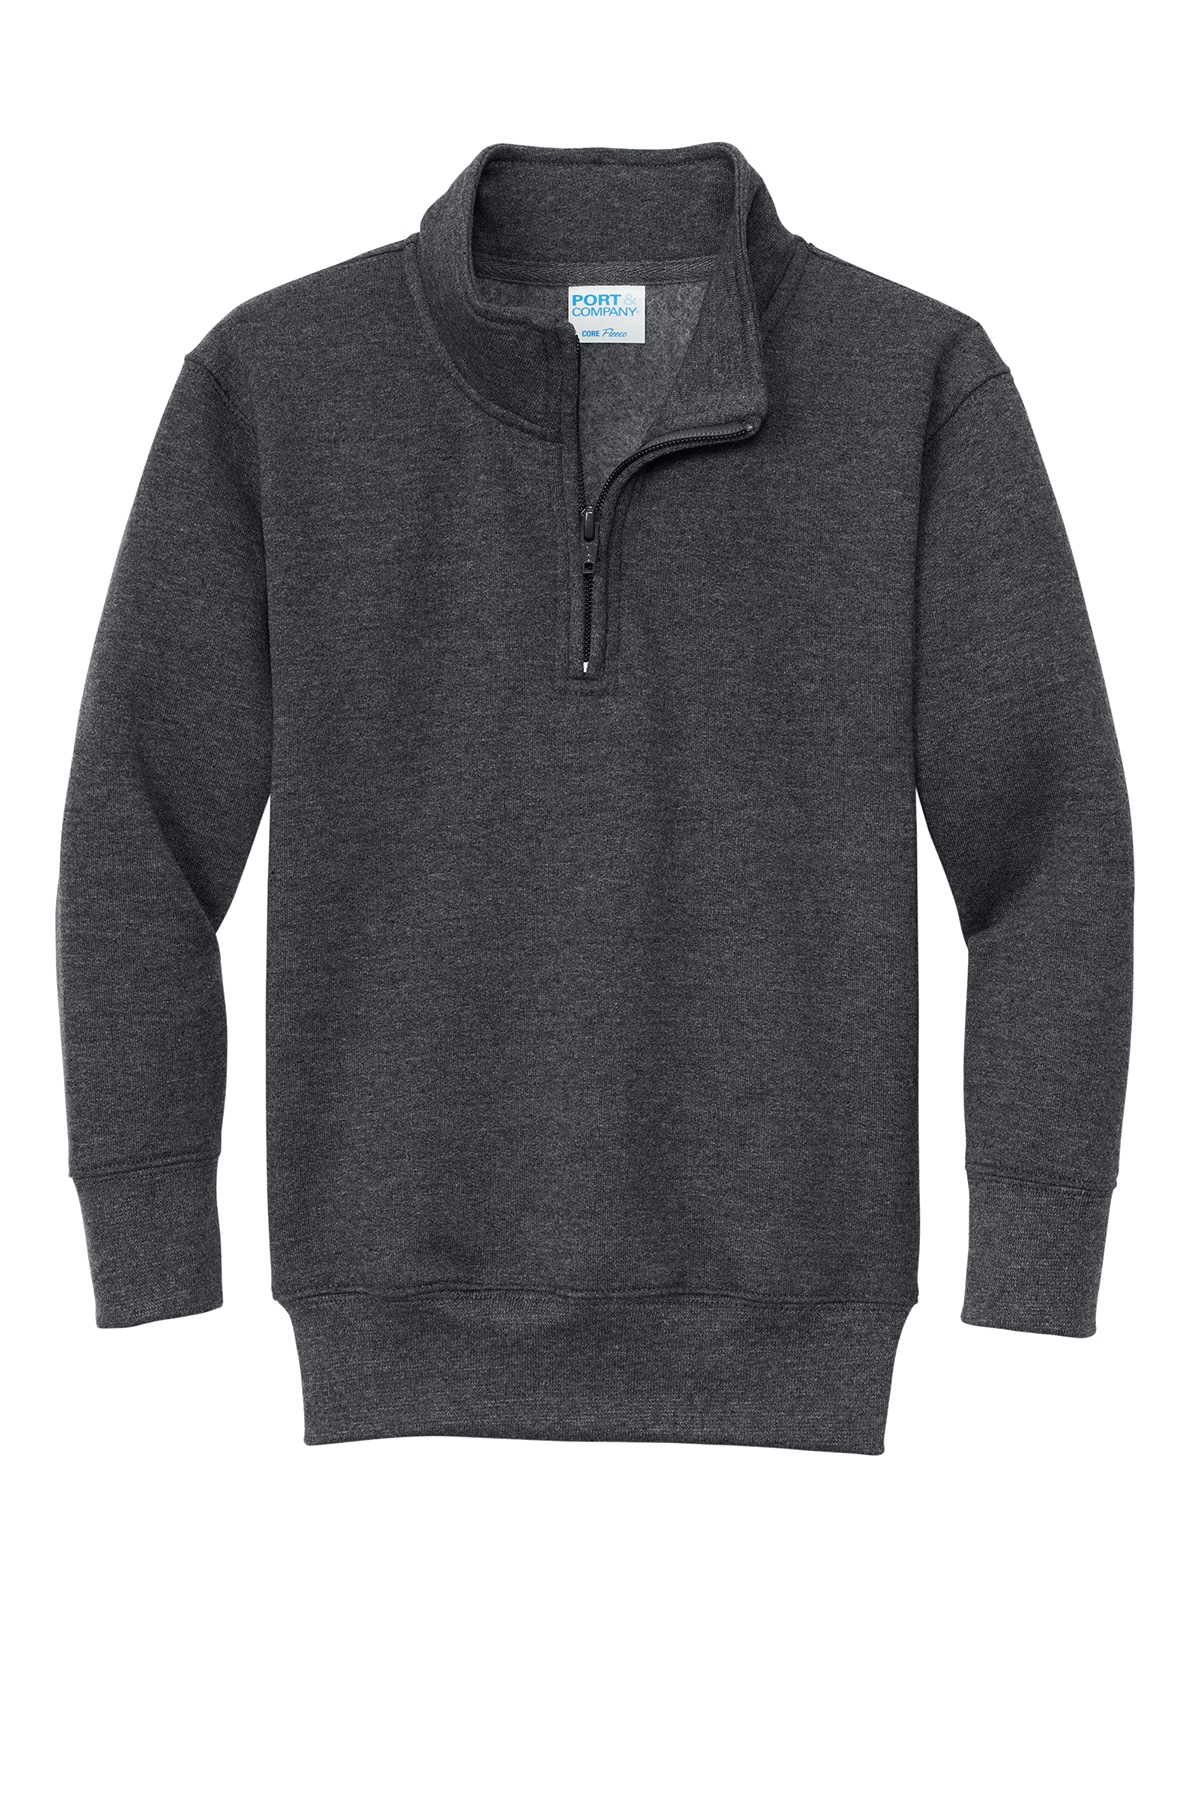 Port & Company Youth Core Fleece 1/4-Zip Pullover Sweatshirt | Product ...